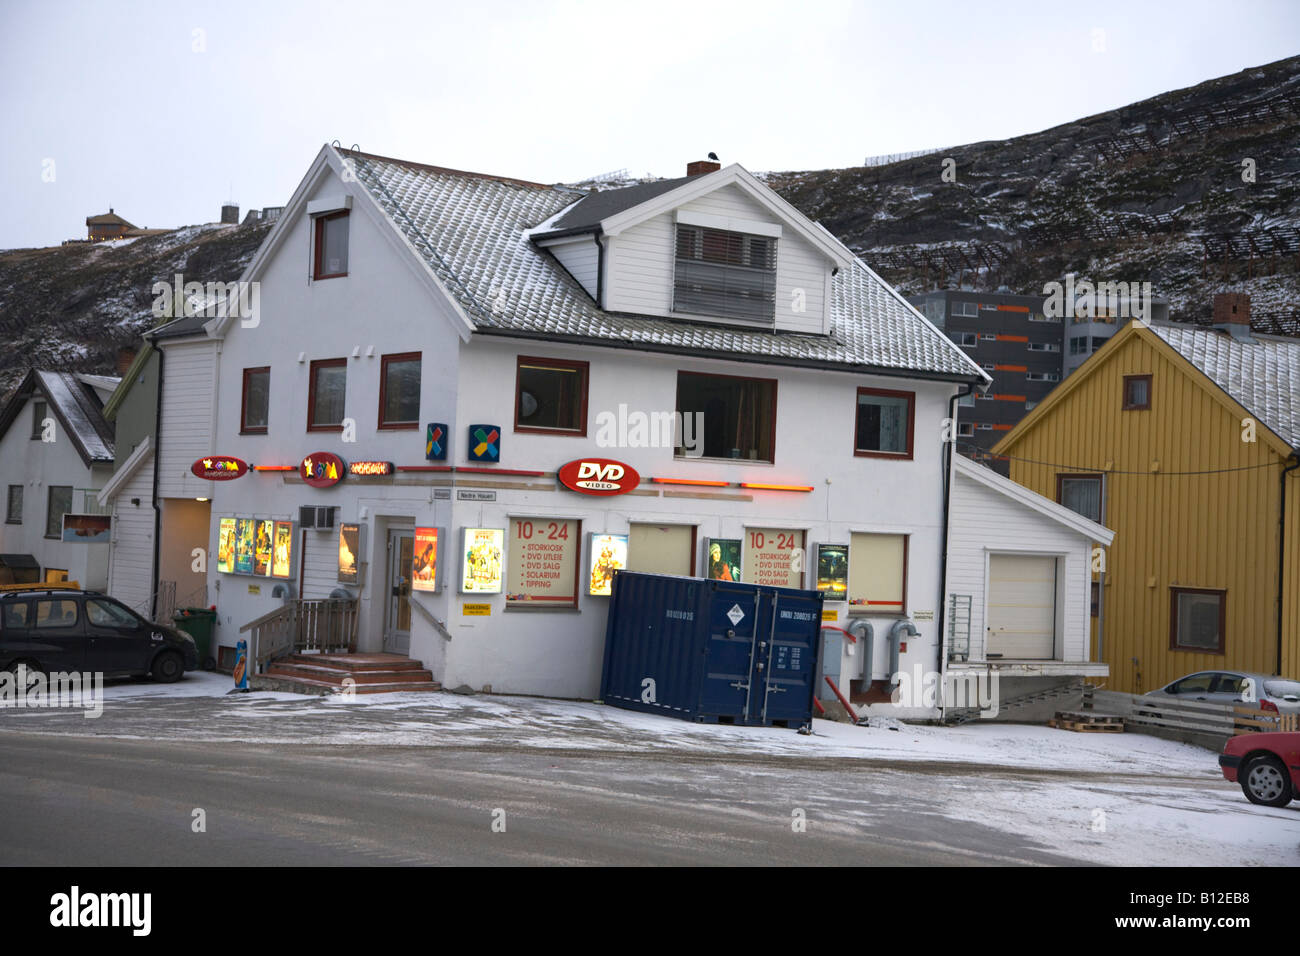 Hammerfest Norwegen Tante-Emma-Laden die dvd mietet Stockfoto